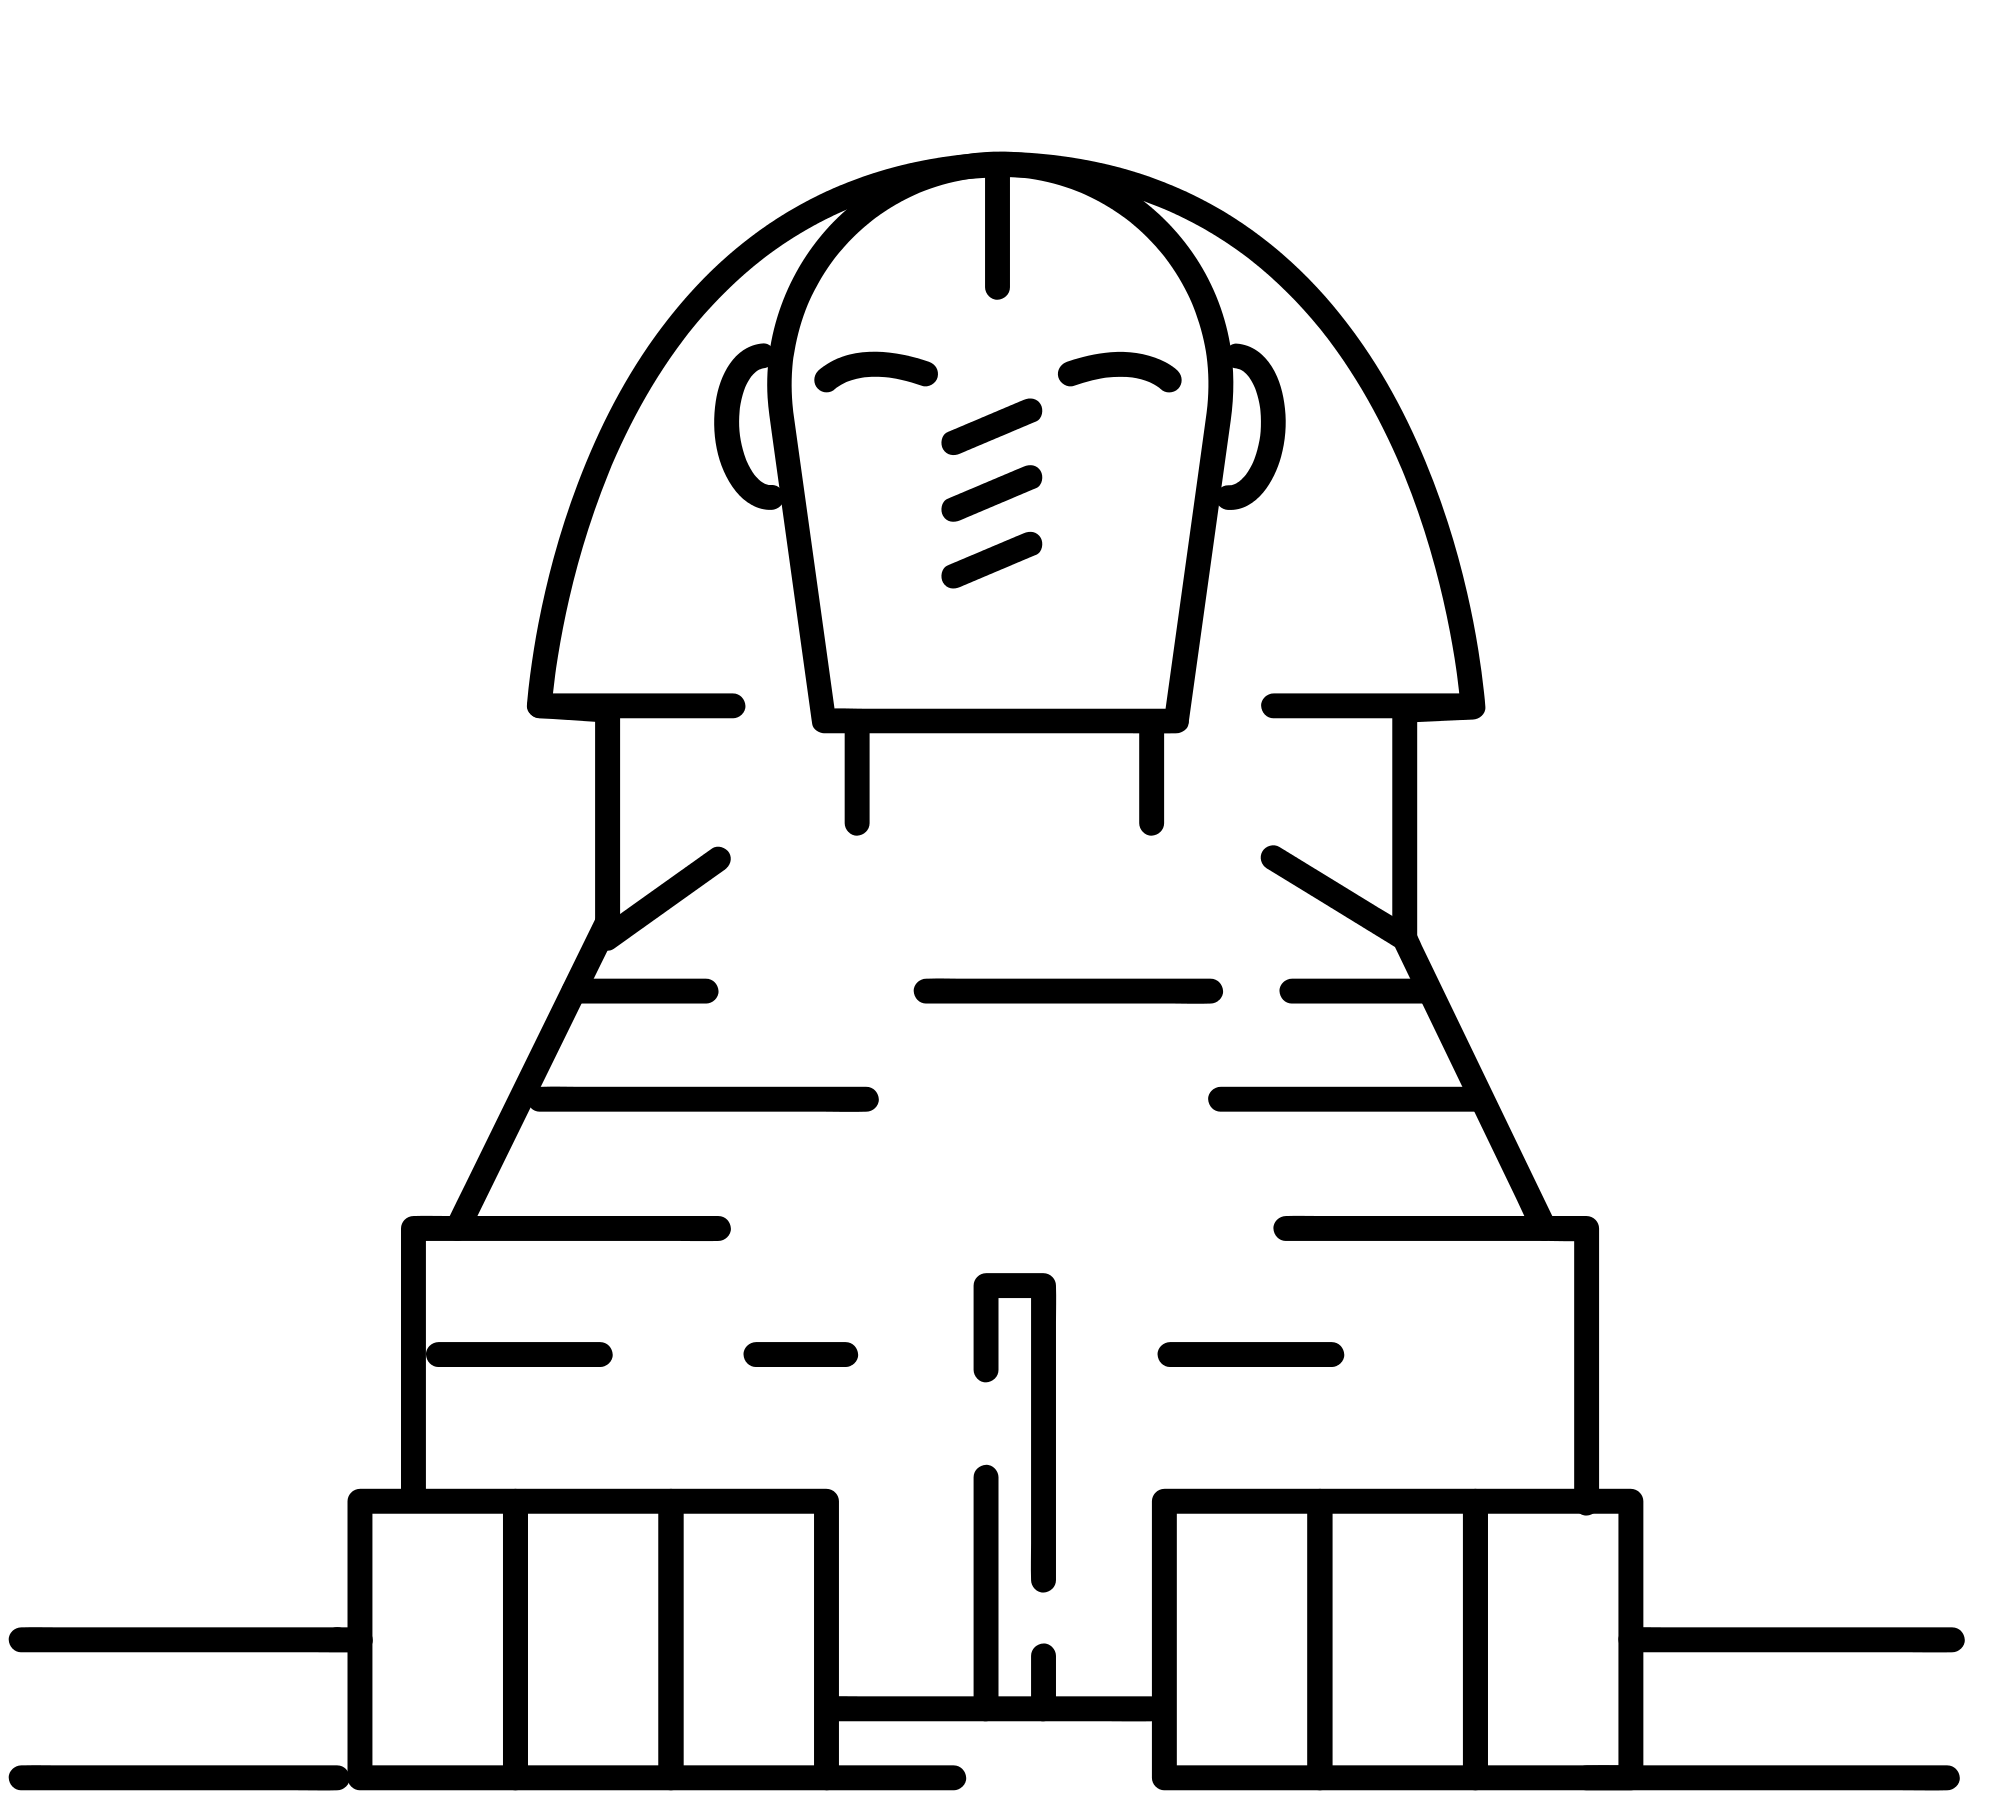 Vectors illustration of sphin